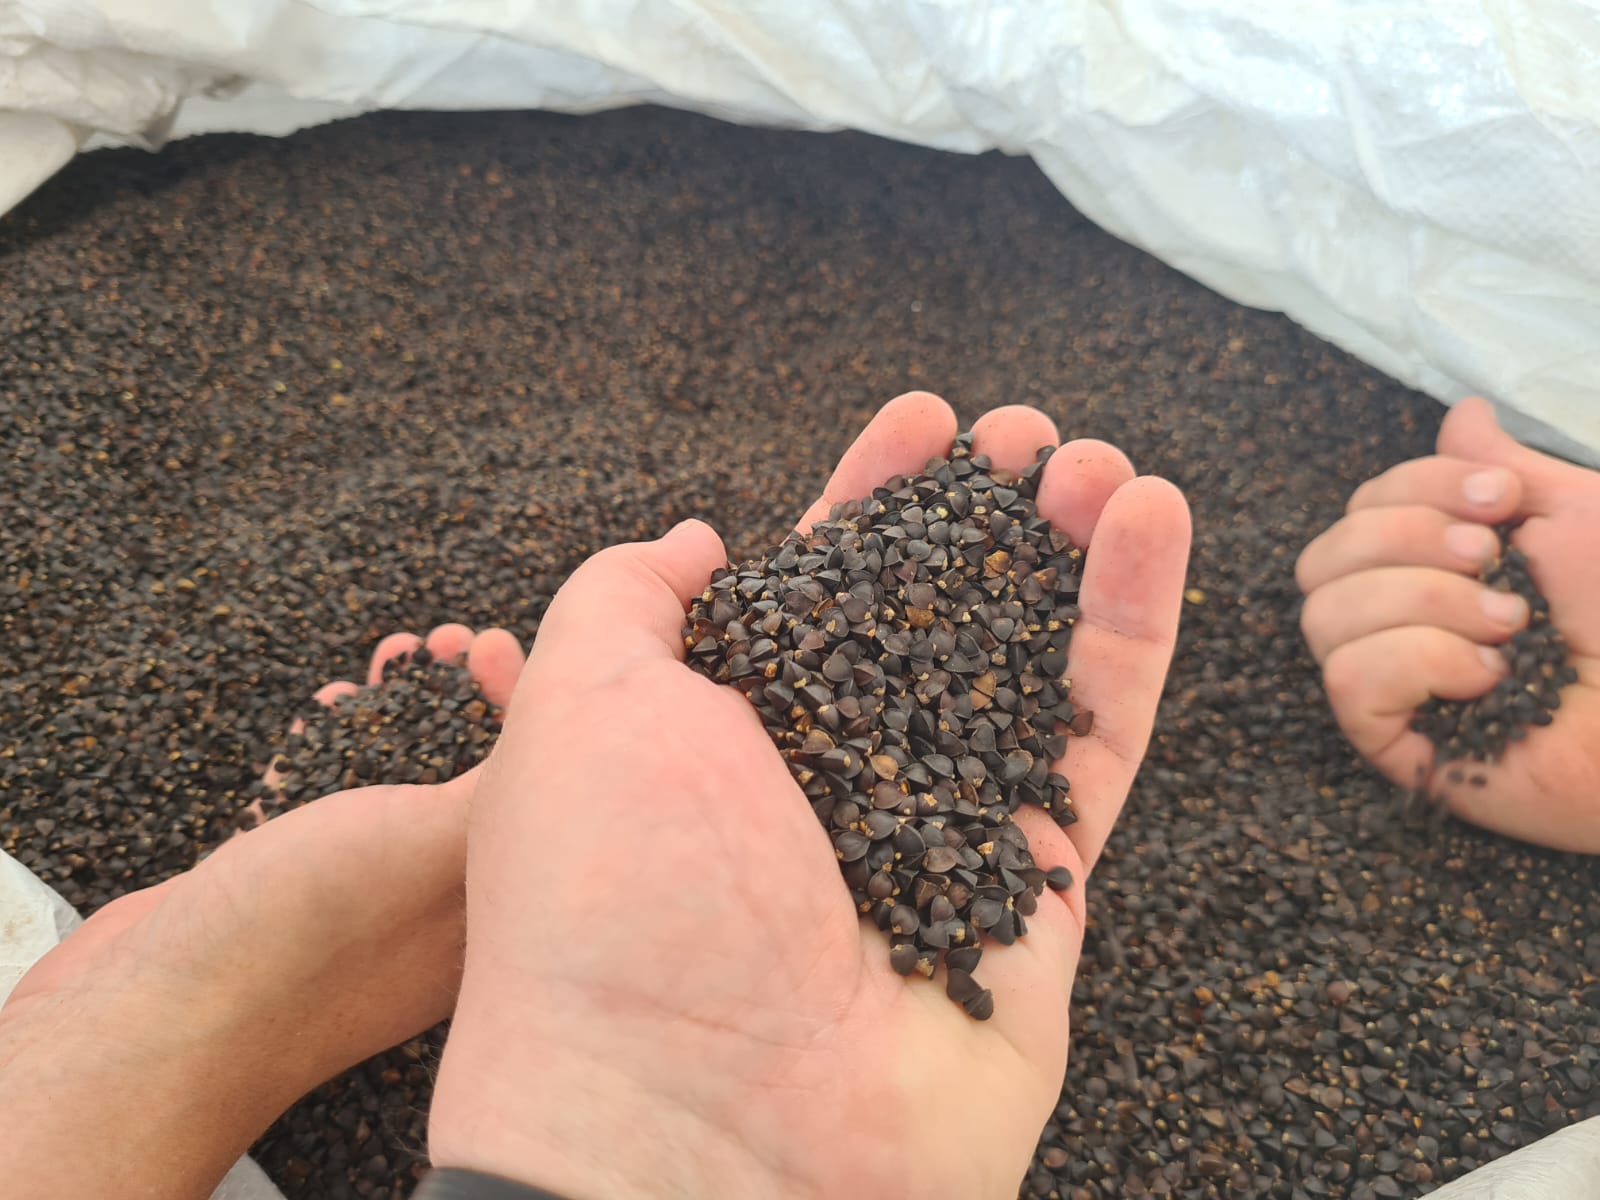 Правительство Канады передало Украине 140 тонн семян гречихи